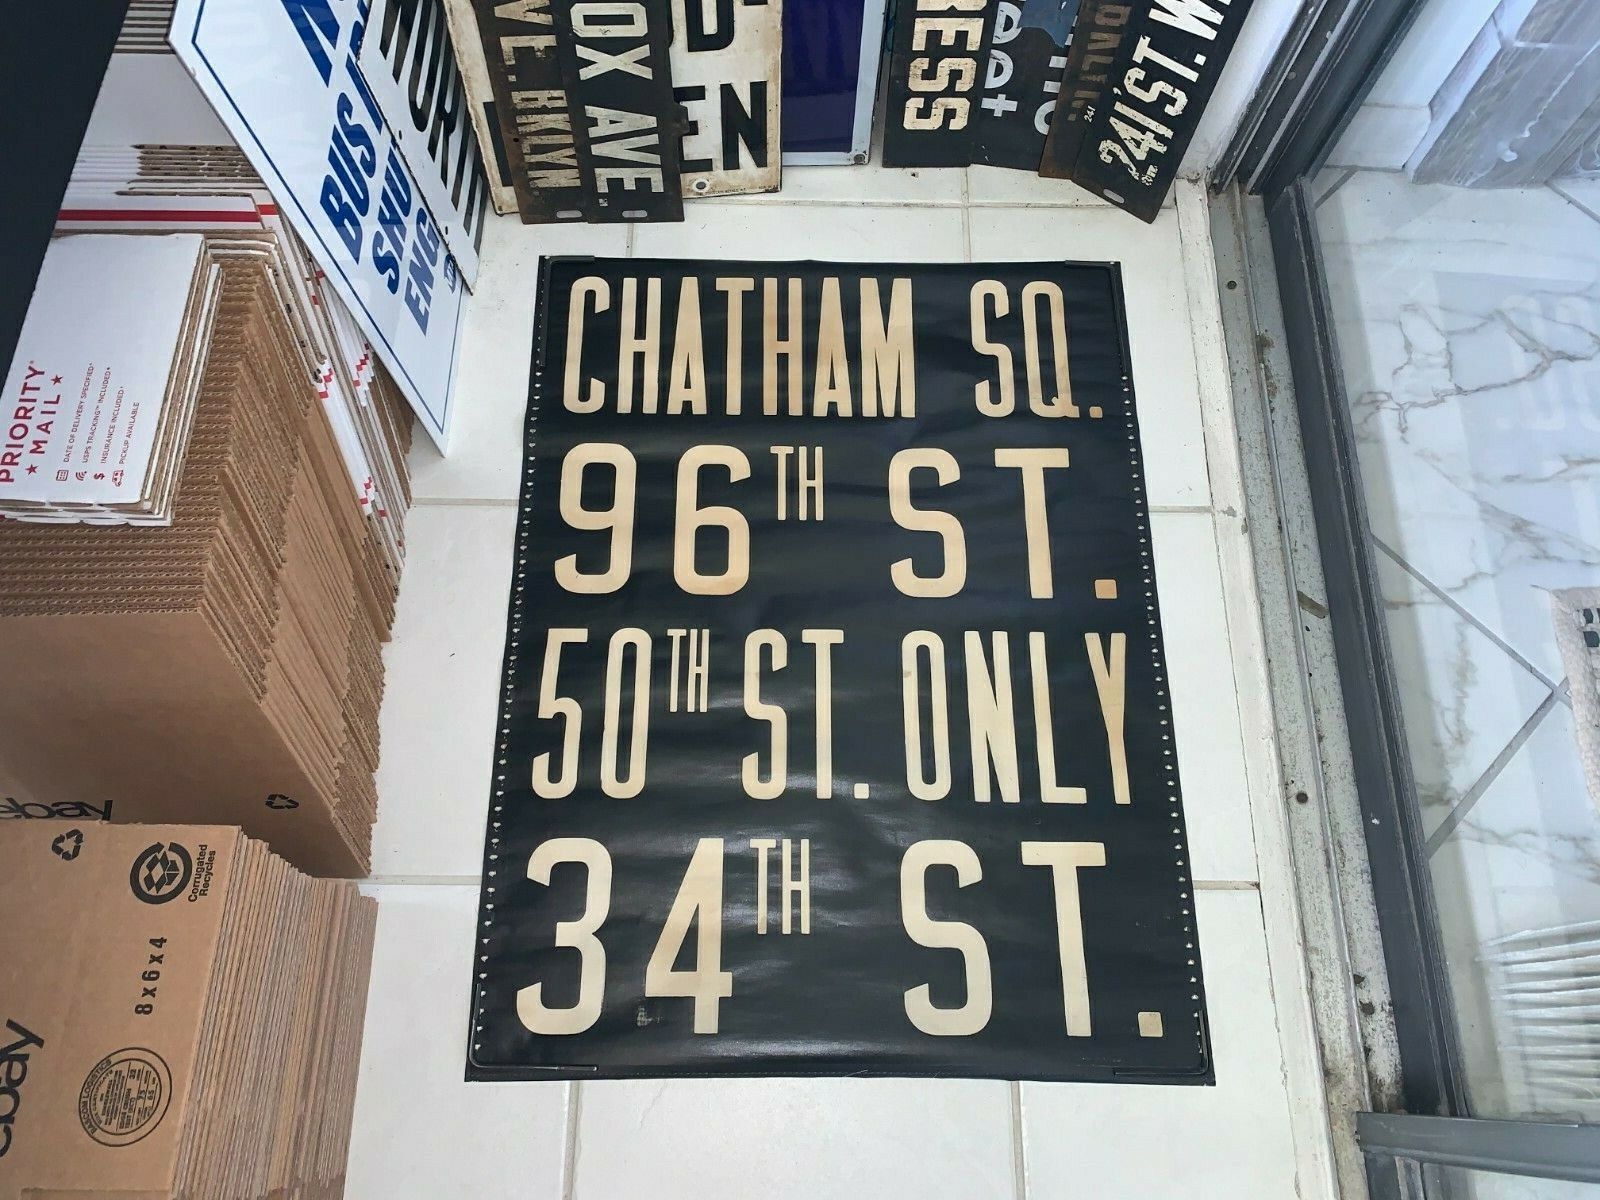 NY NYC MACK BUS ROLL SIGN MANHATTAN CHATHAM SQUARE CHINATOWN BOWERY PARK ROW ART